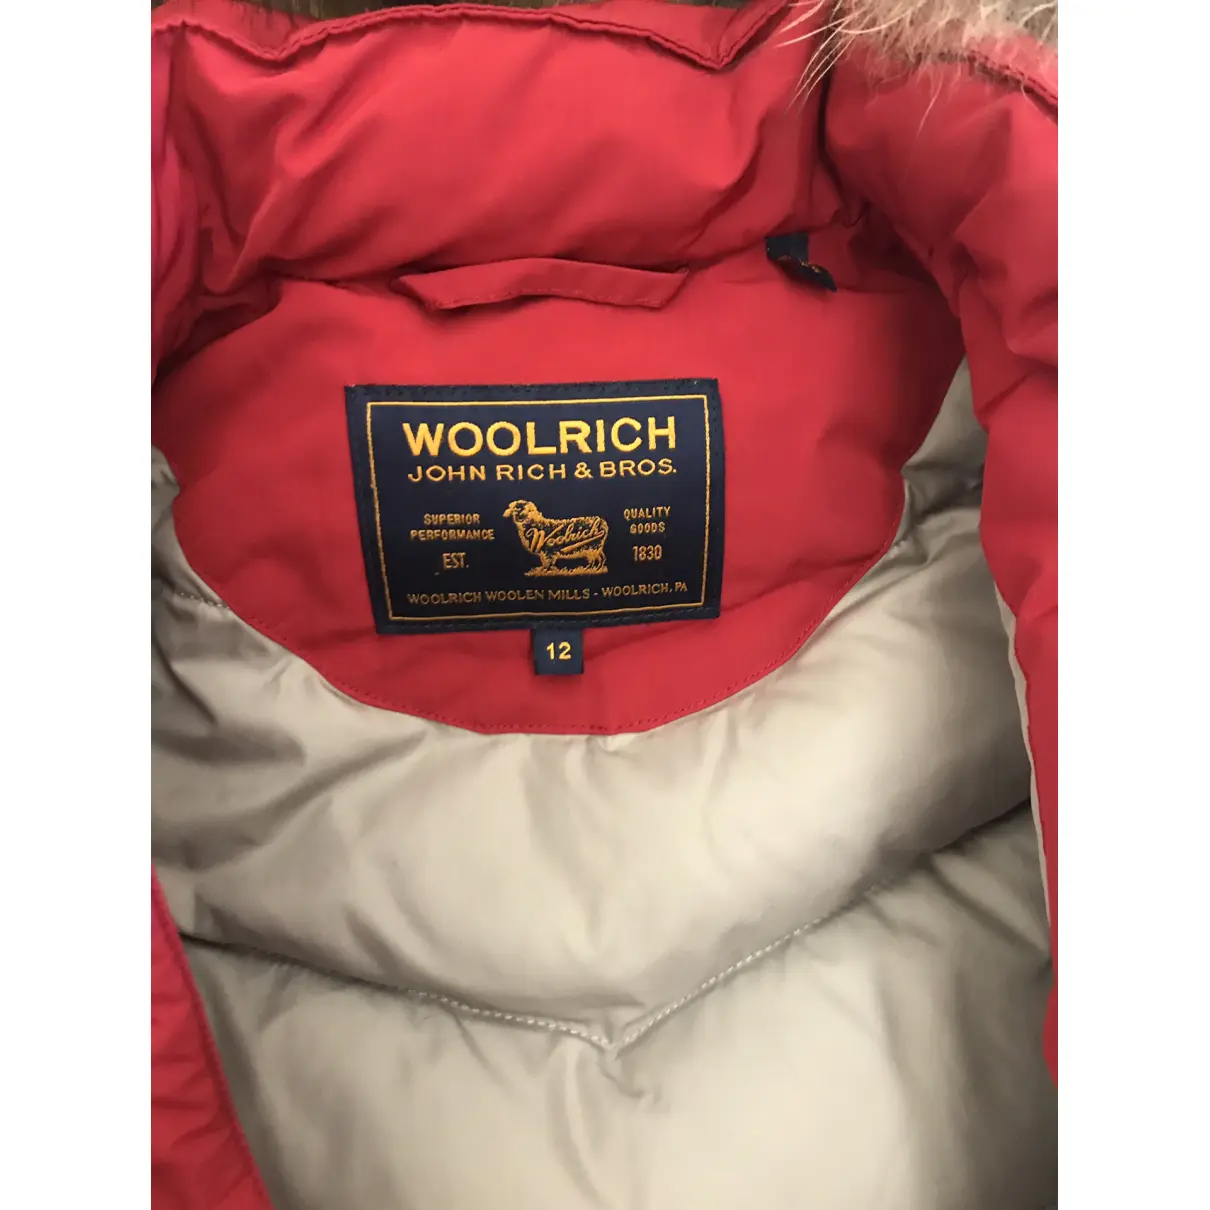 Buy Woolrich Puffer online